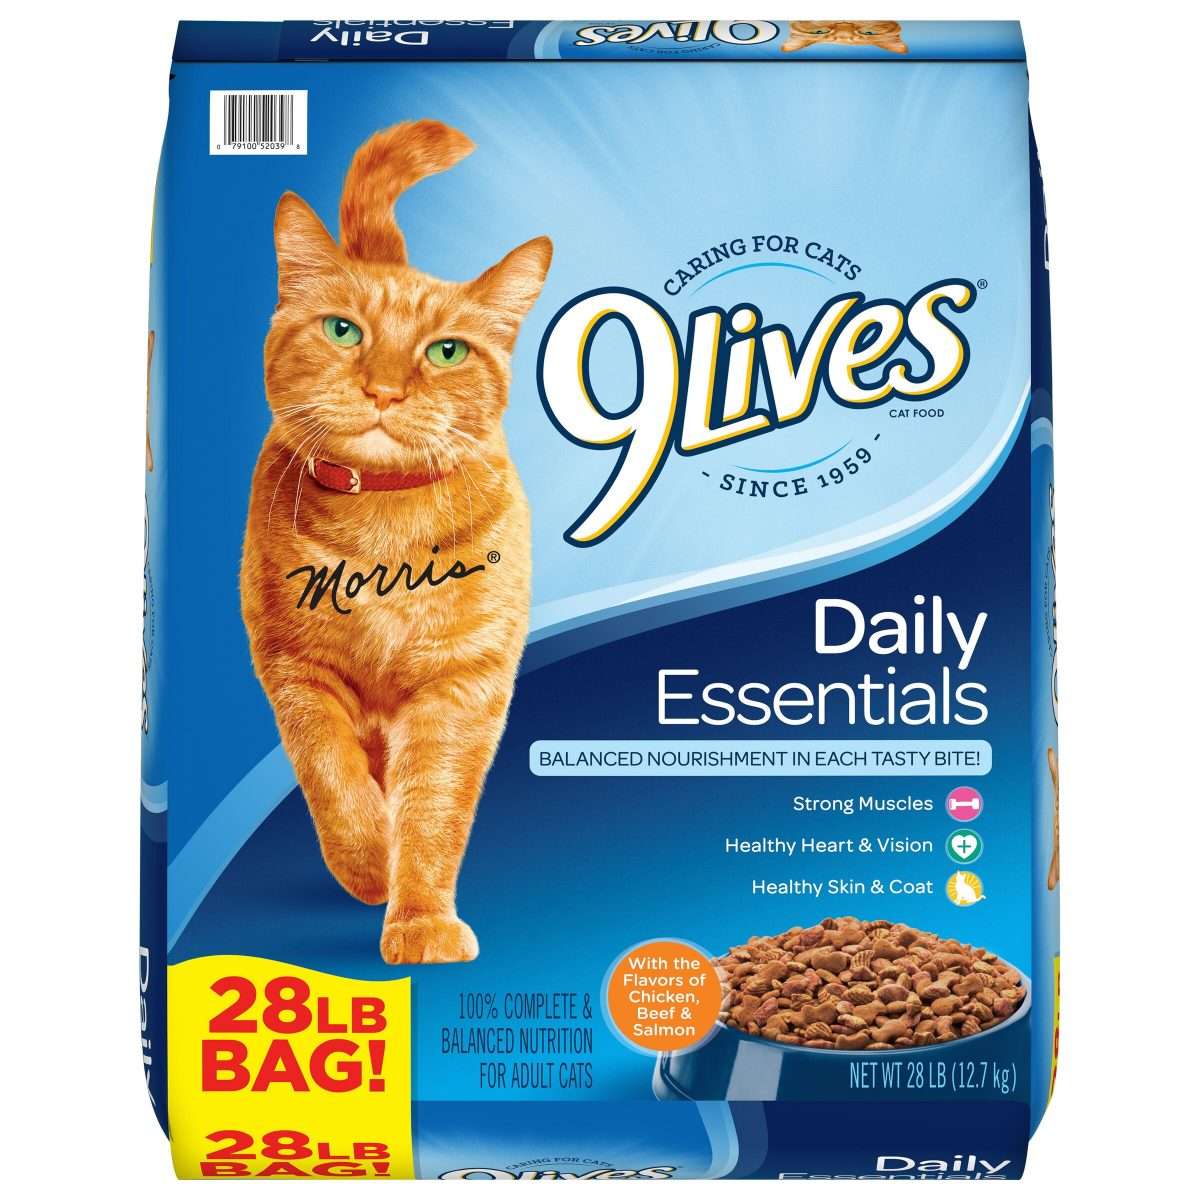 9Lives Daily Essentials Cat Food, 28